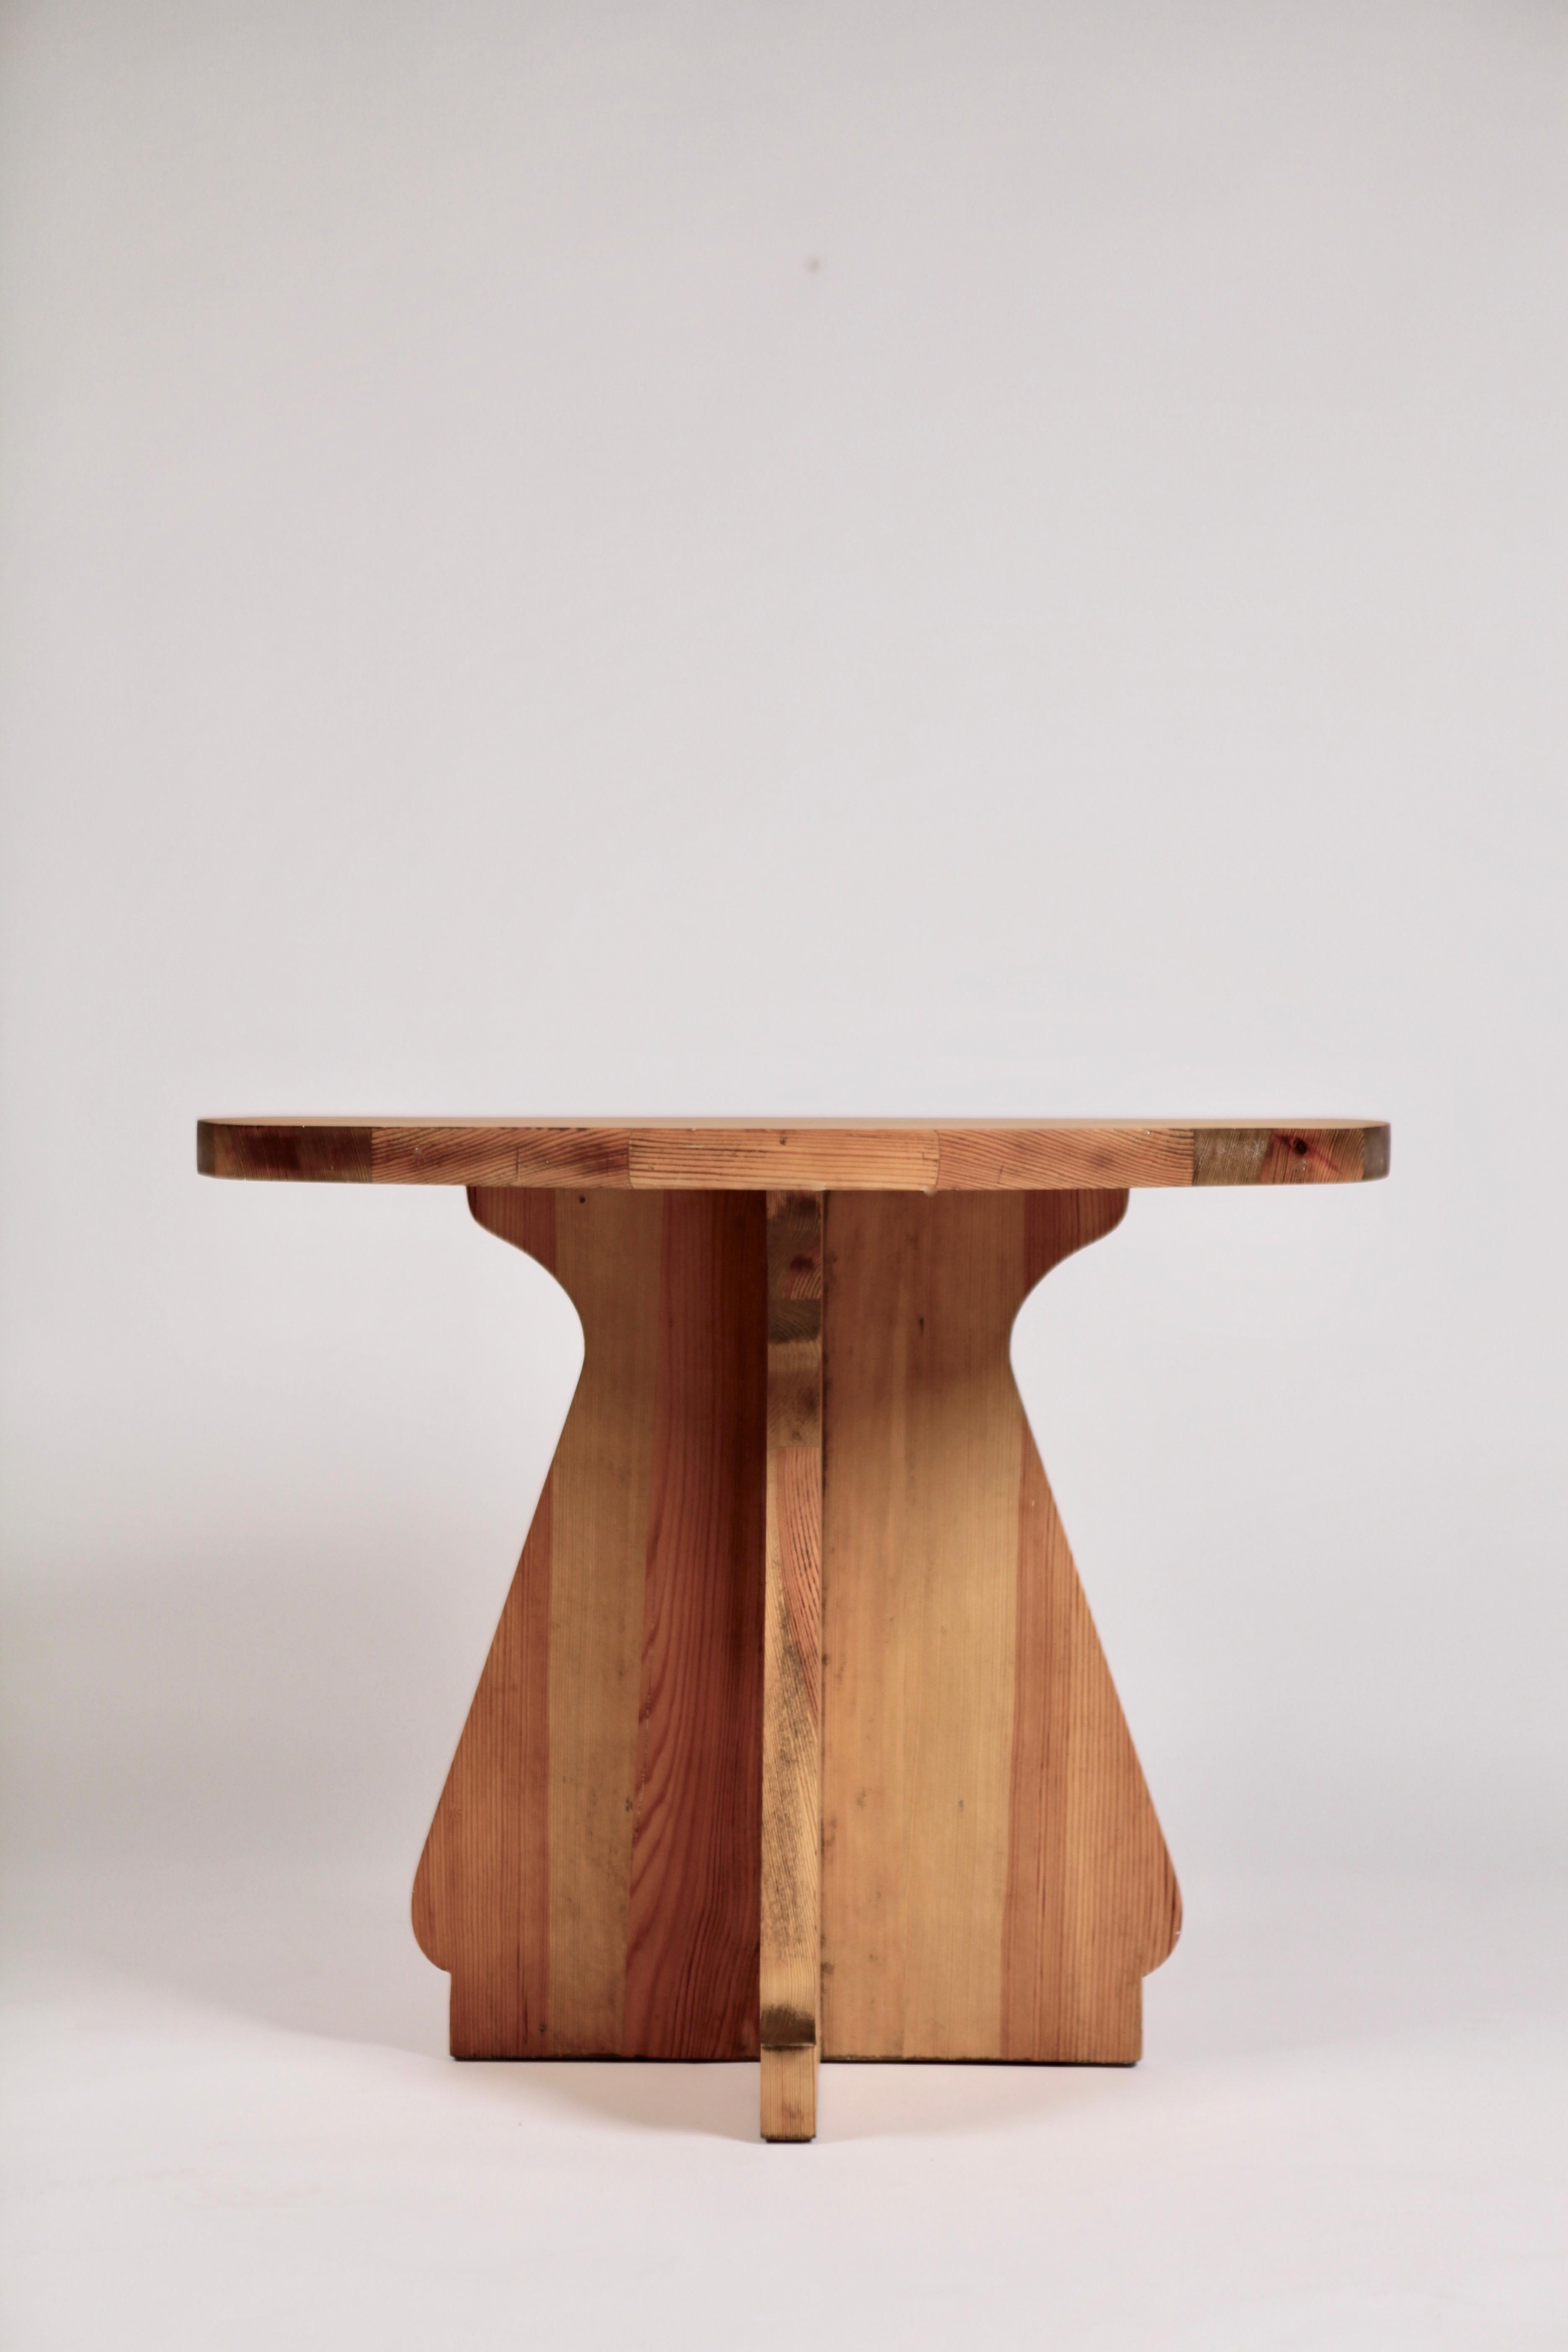 Swedish Nordiska Kompaniet, Pine Table, Attributed to Axel Einar Hjorth, Sweden, 1940s